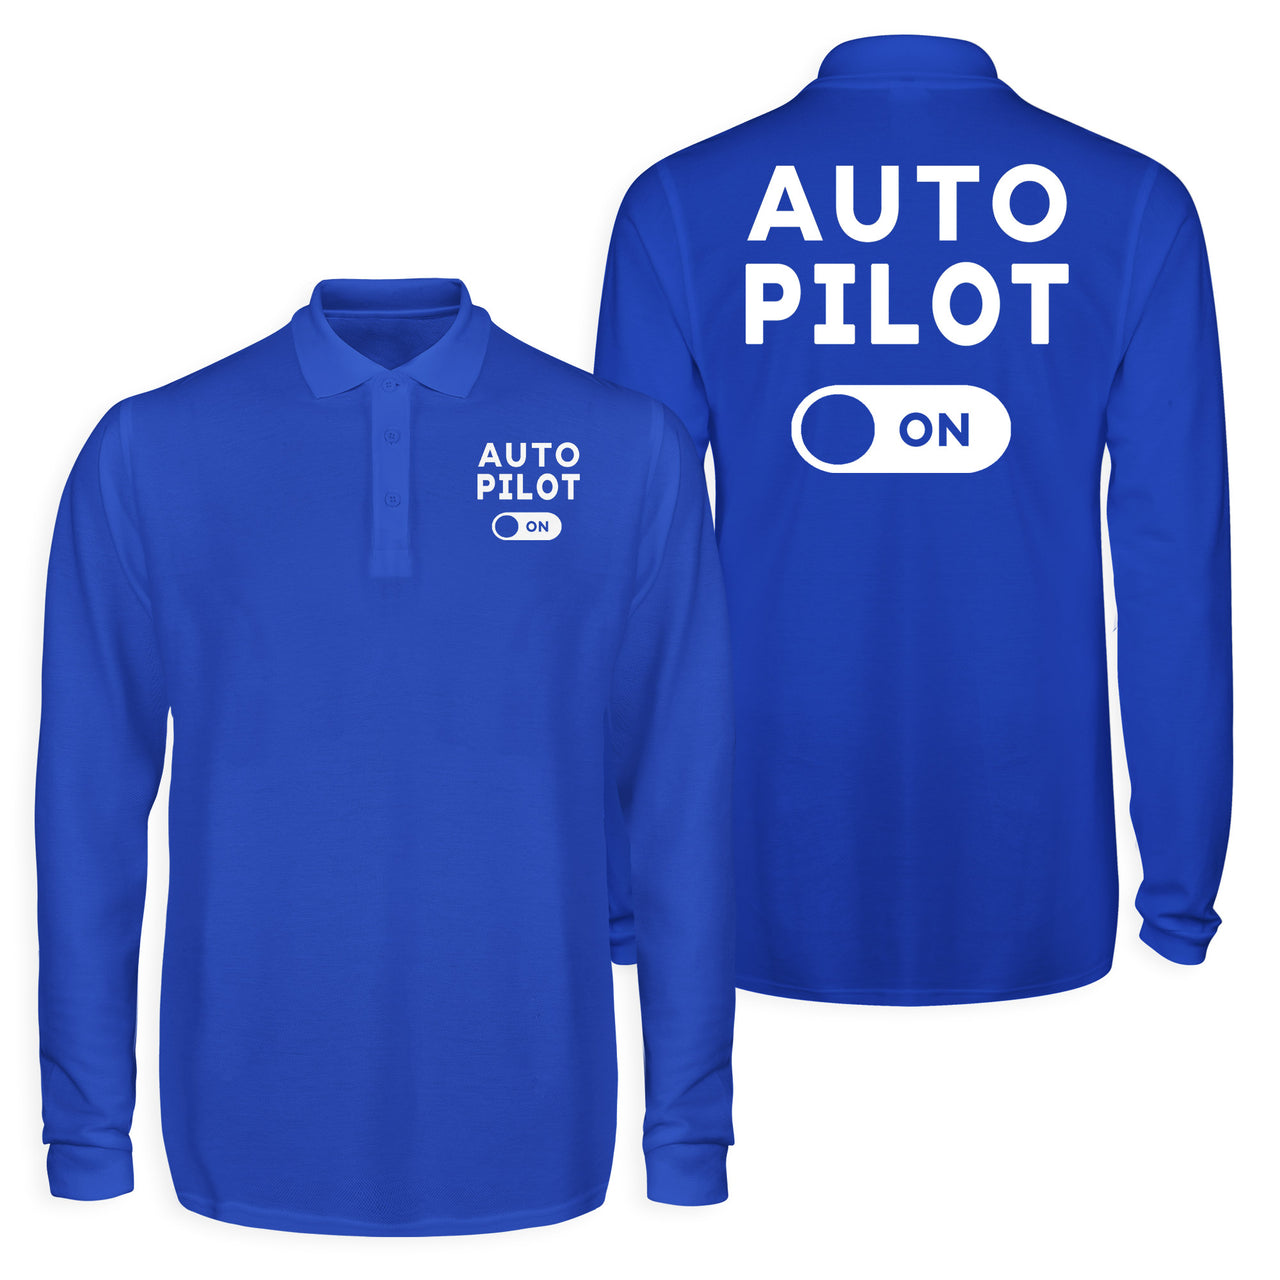 Auto Pilot ON Designed Long Sleeve Polo T-Shirts (Double-Side)